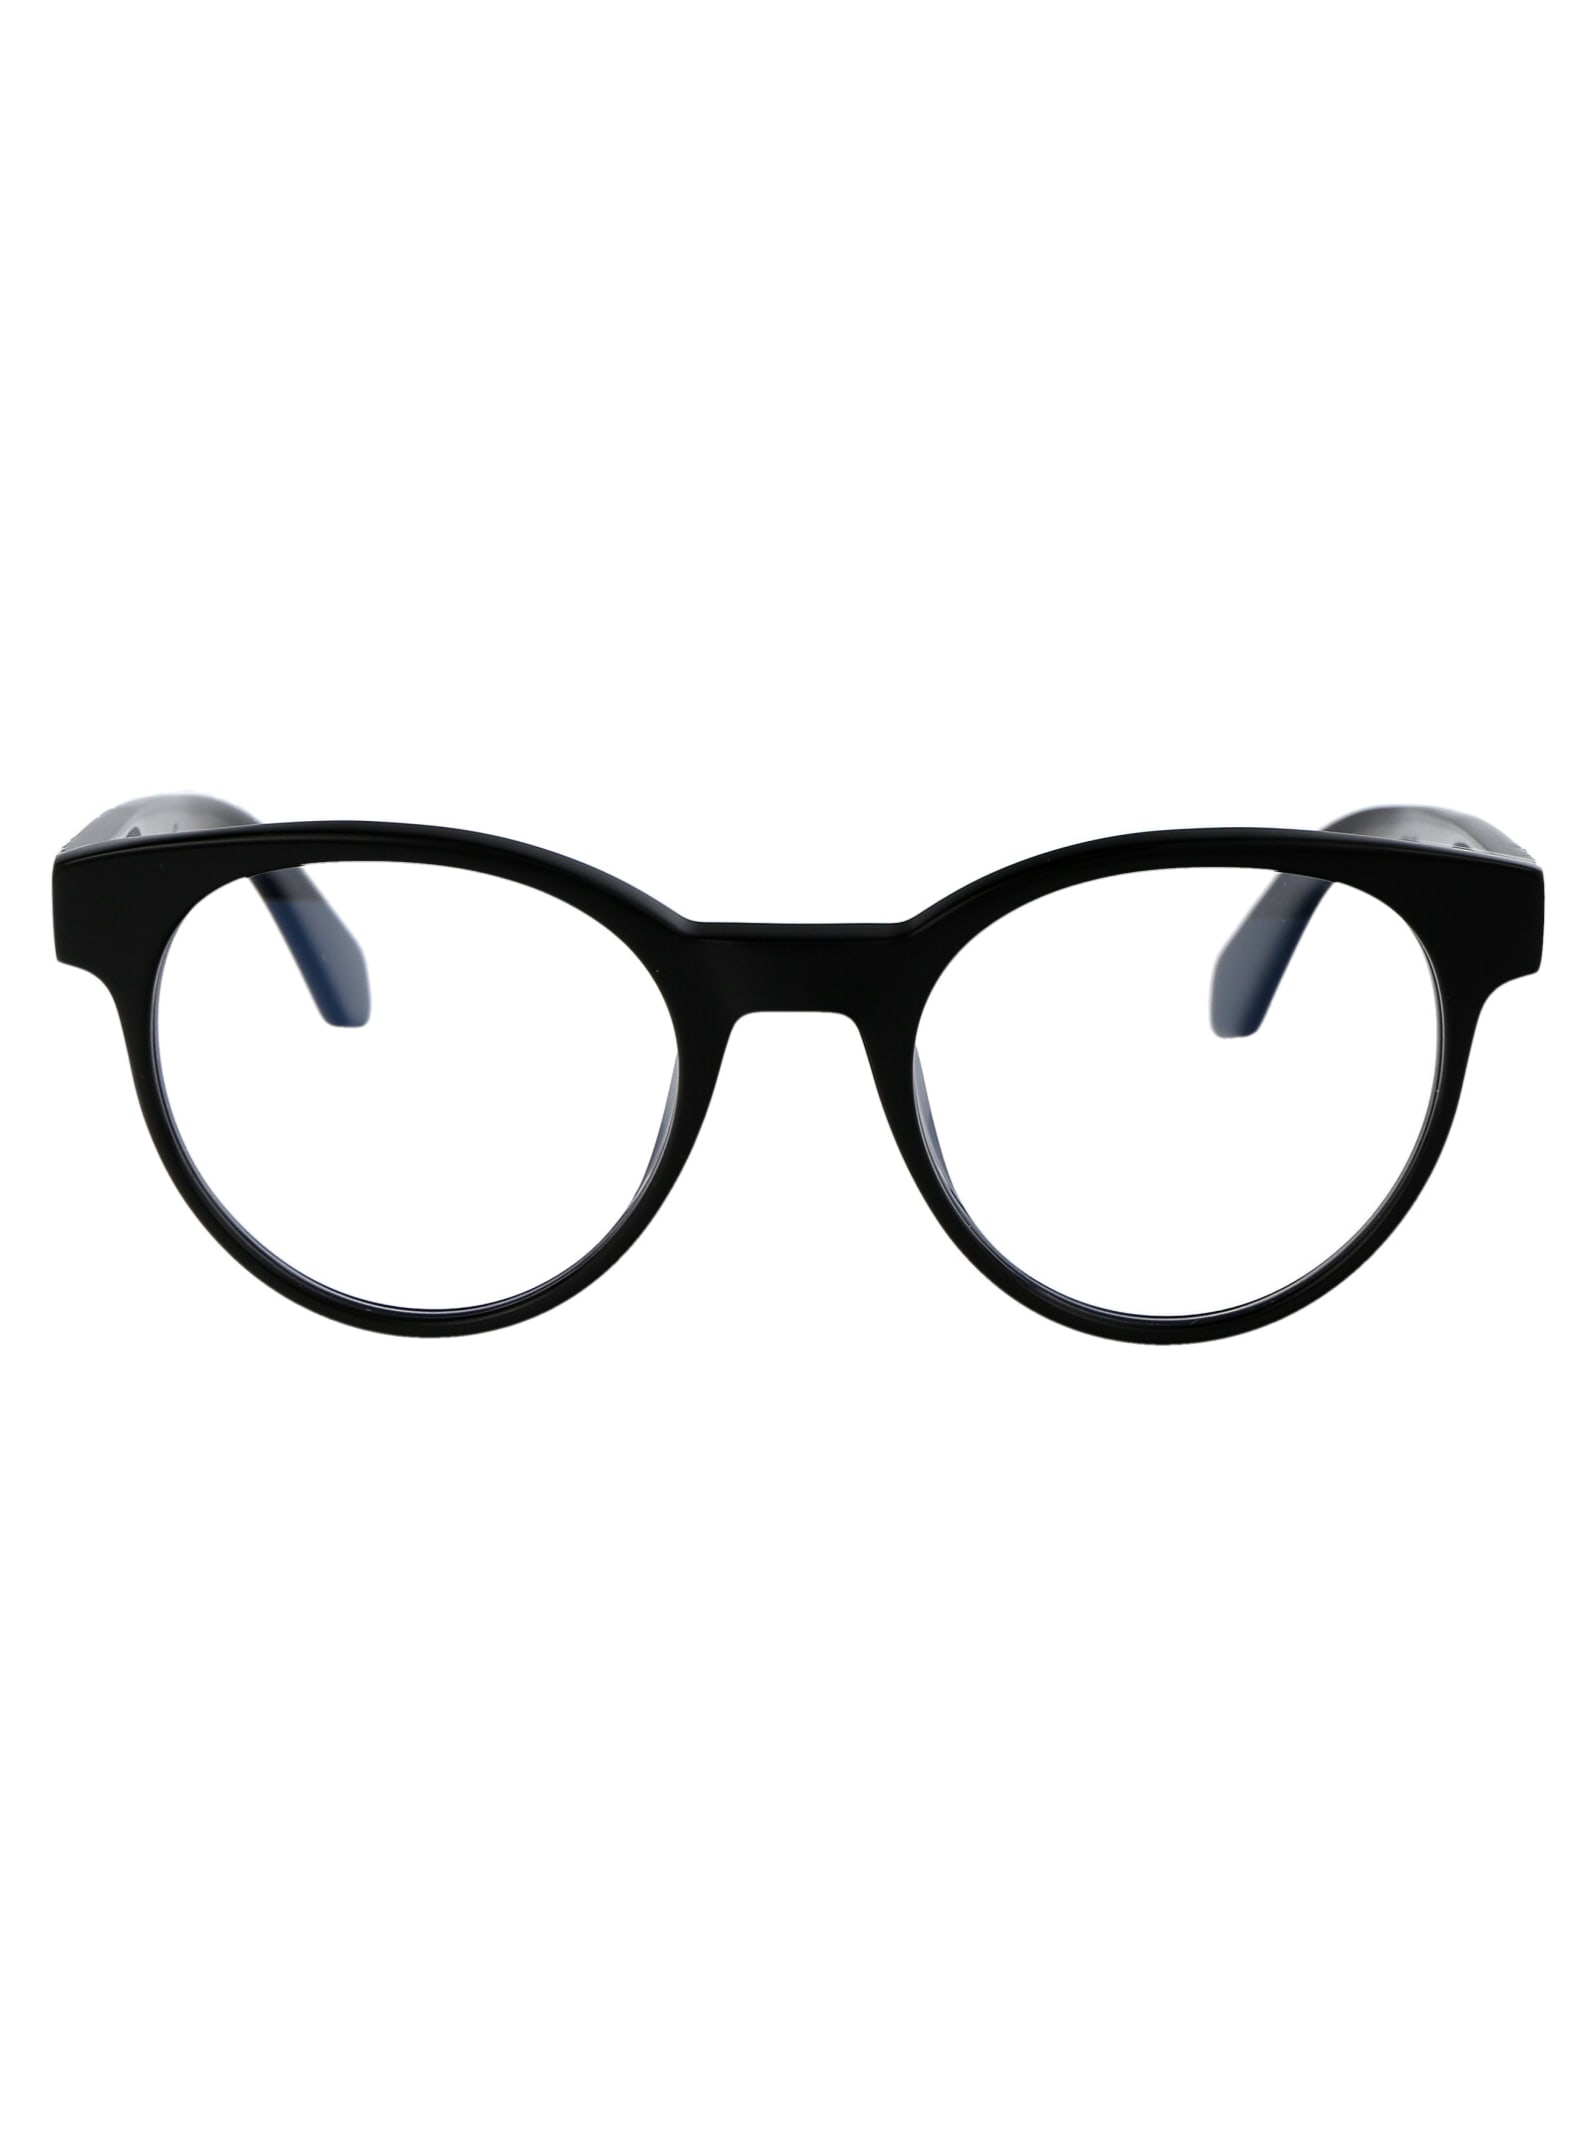 Optical Style 68 Glasses